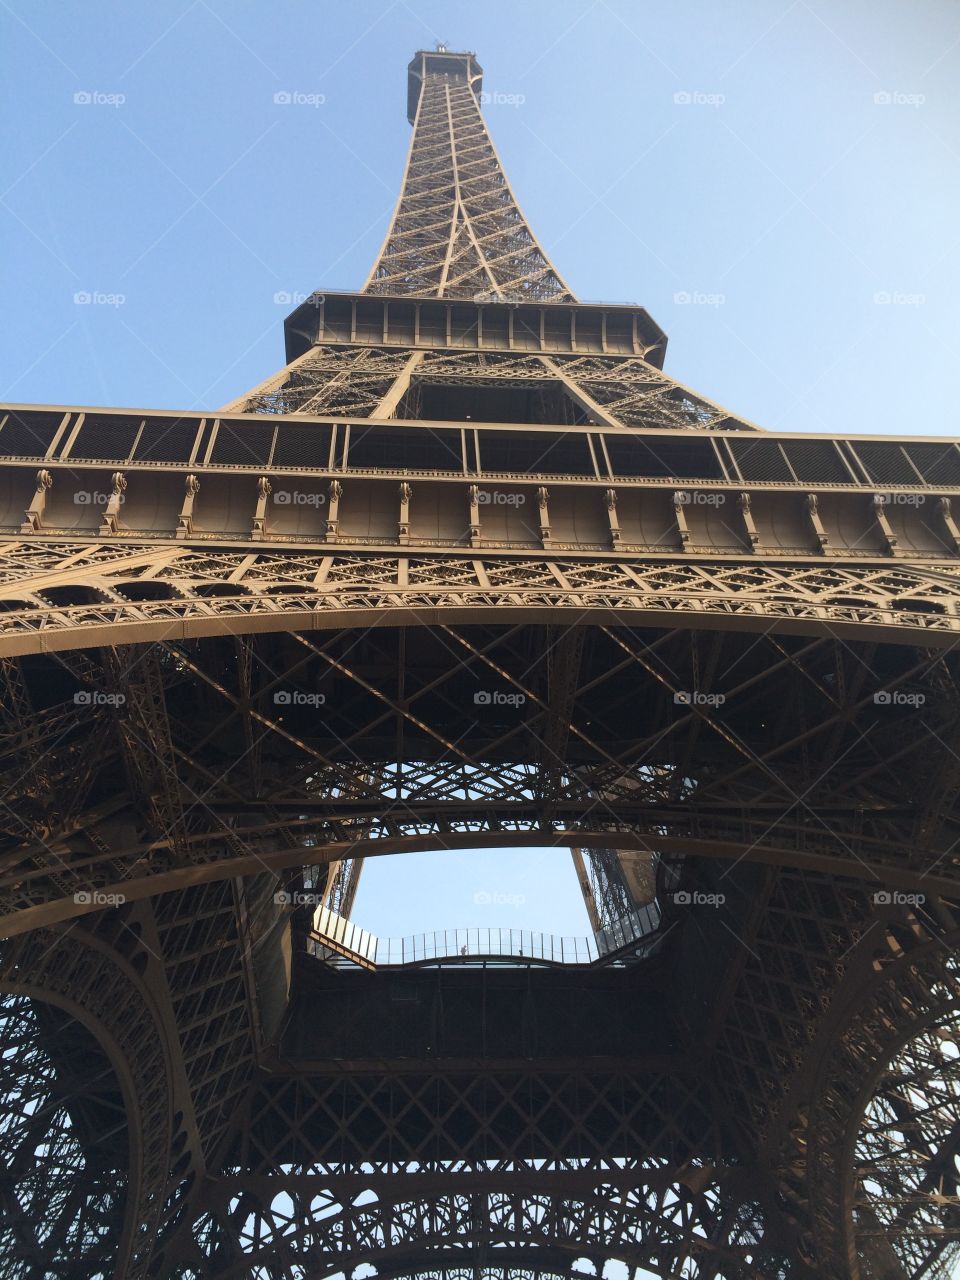 Going up. Eiffel Tower